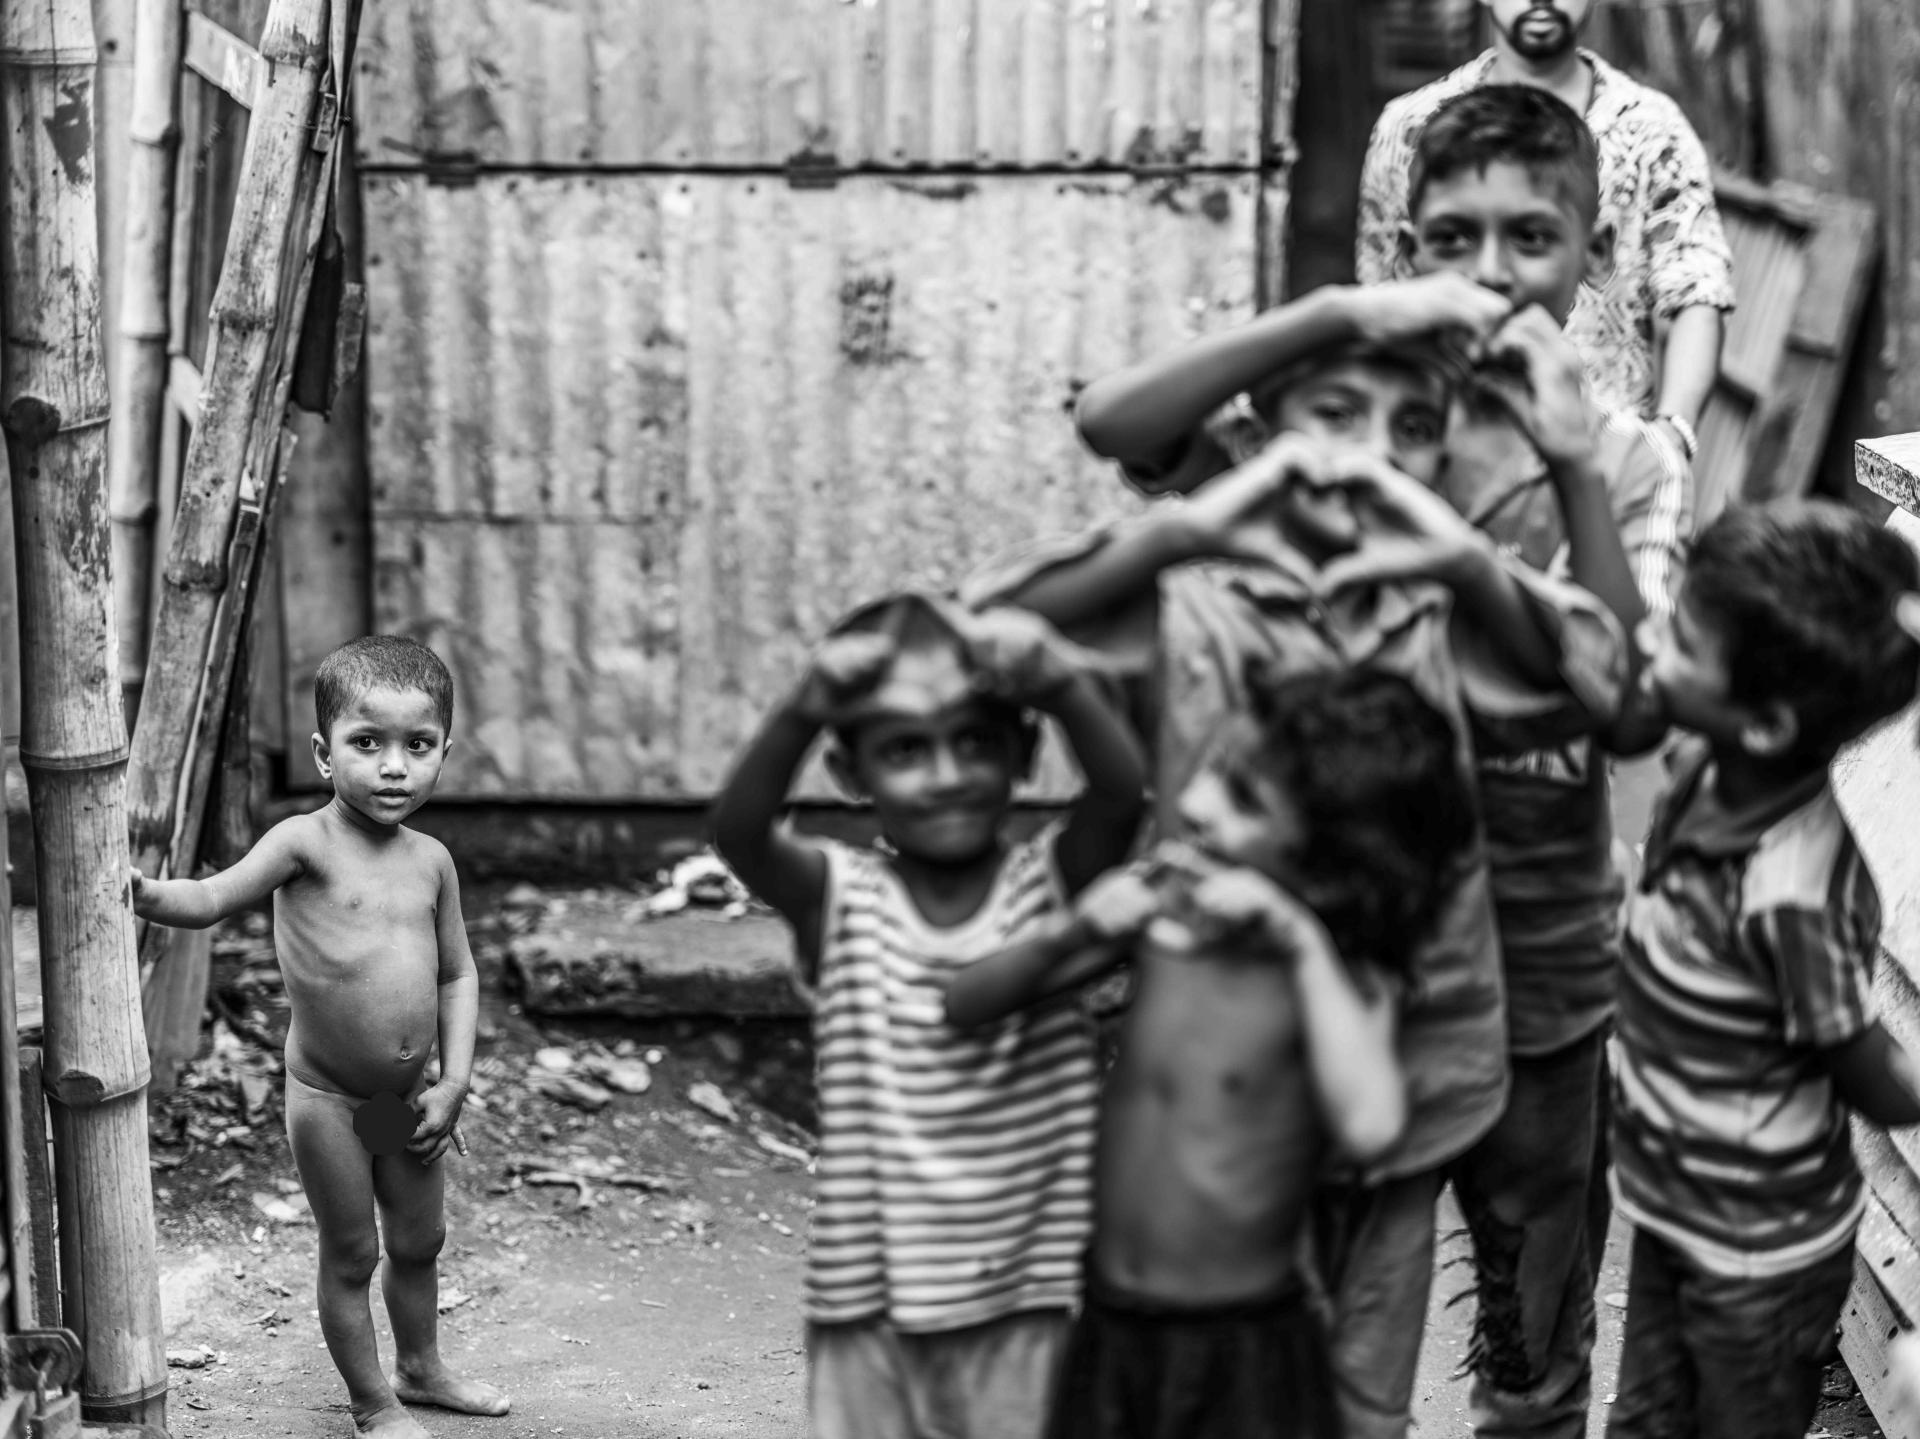 New York Photography Awards Winner - Peoples of Dhaka